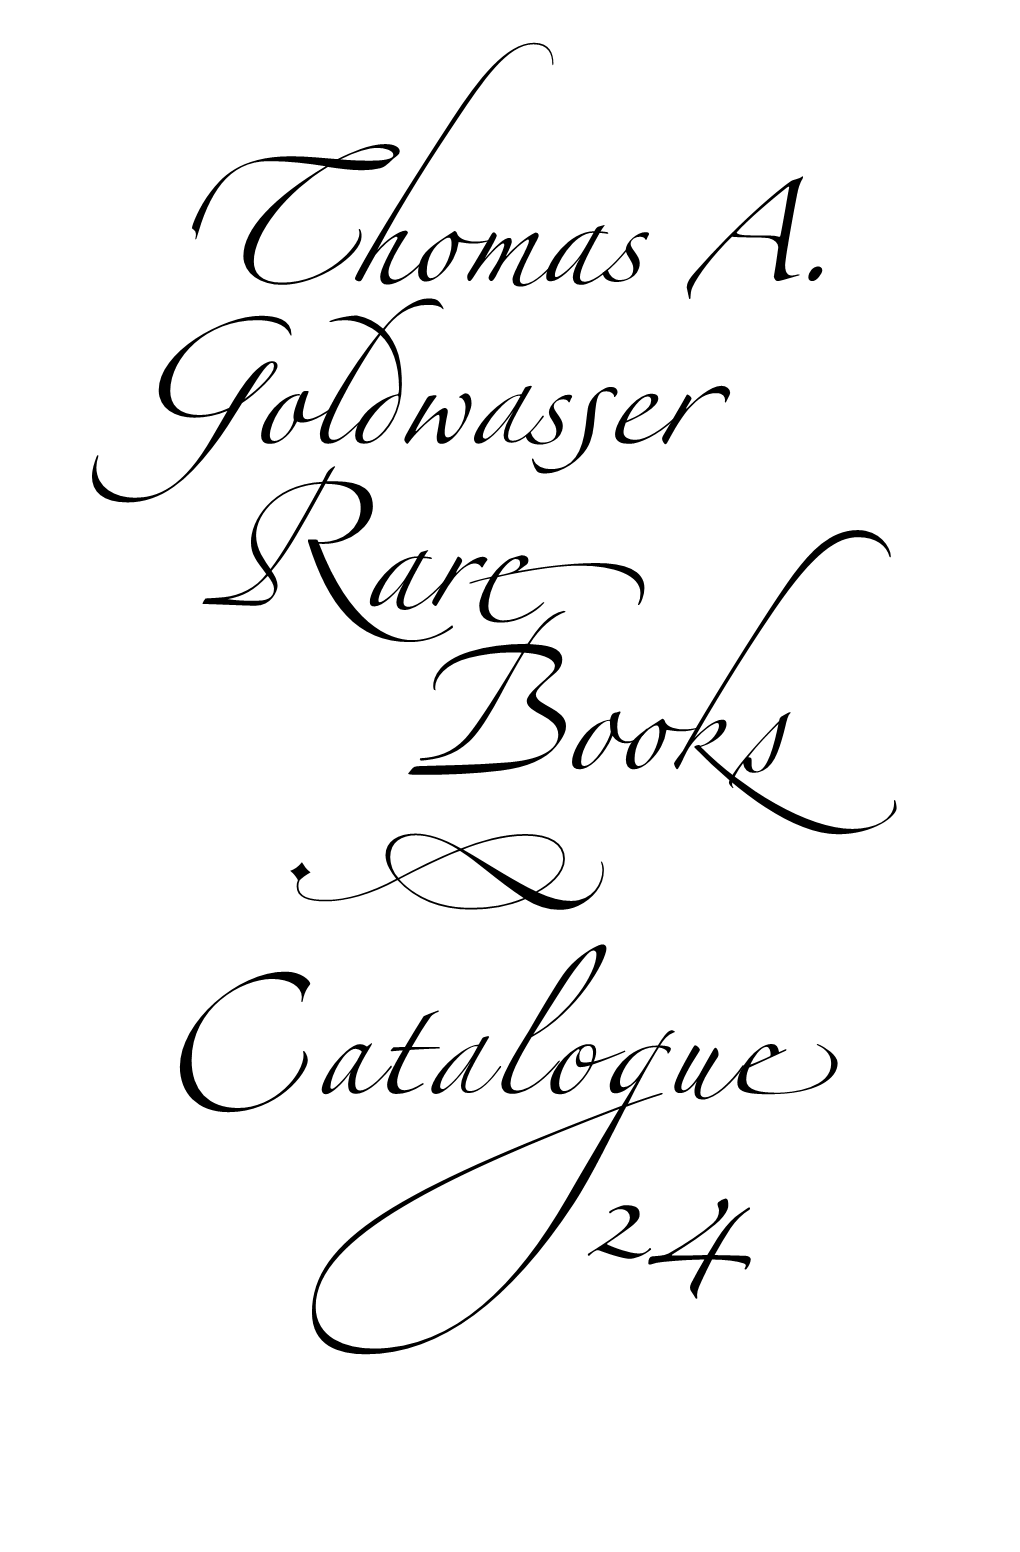 Thomas A. Goldwasser Rare Books T Catalogue 24